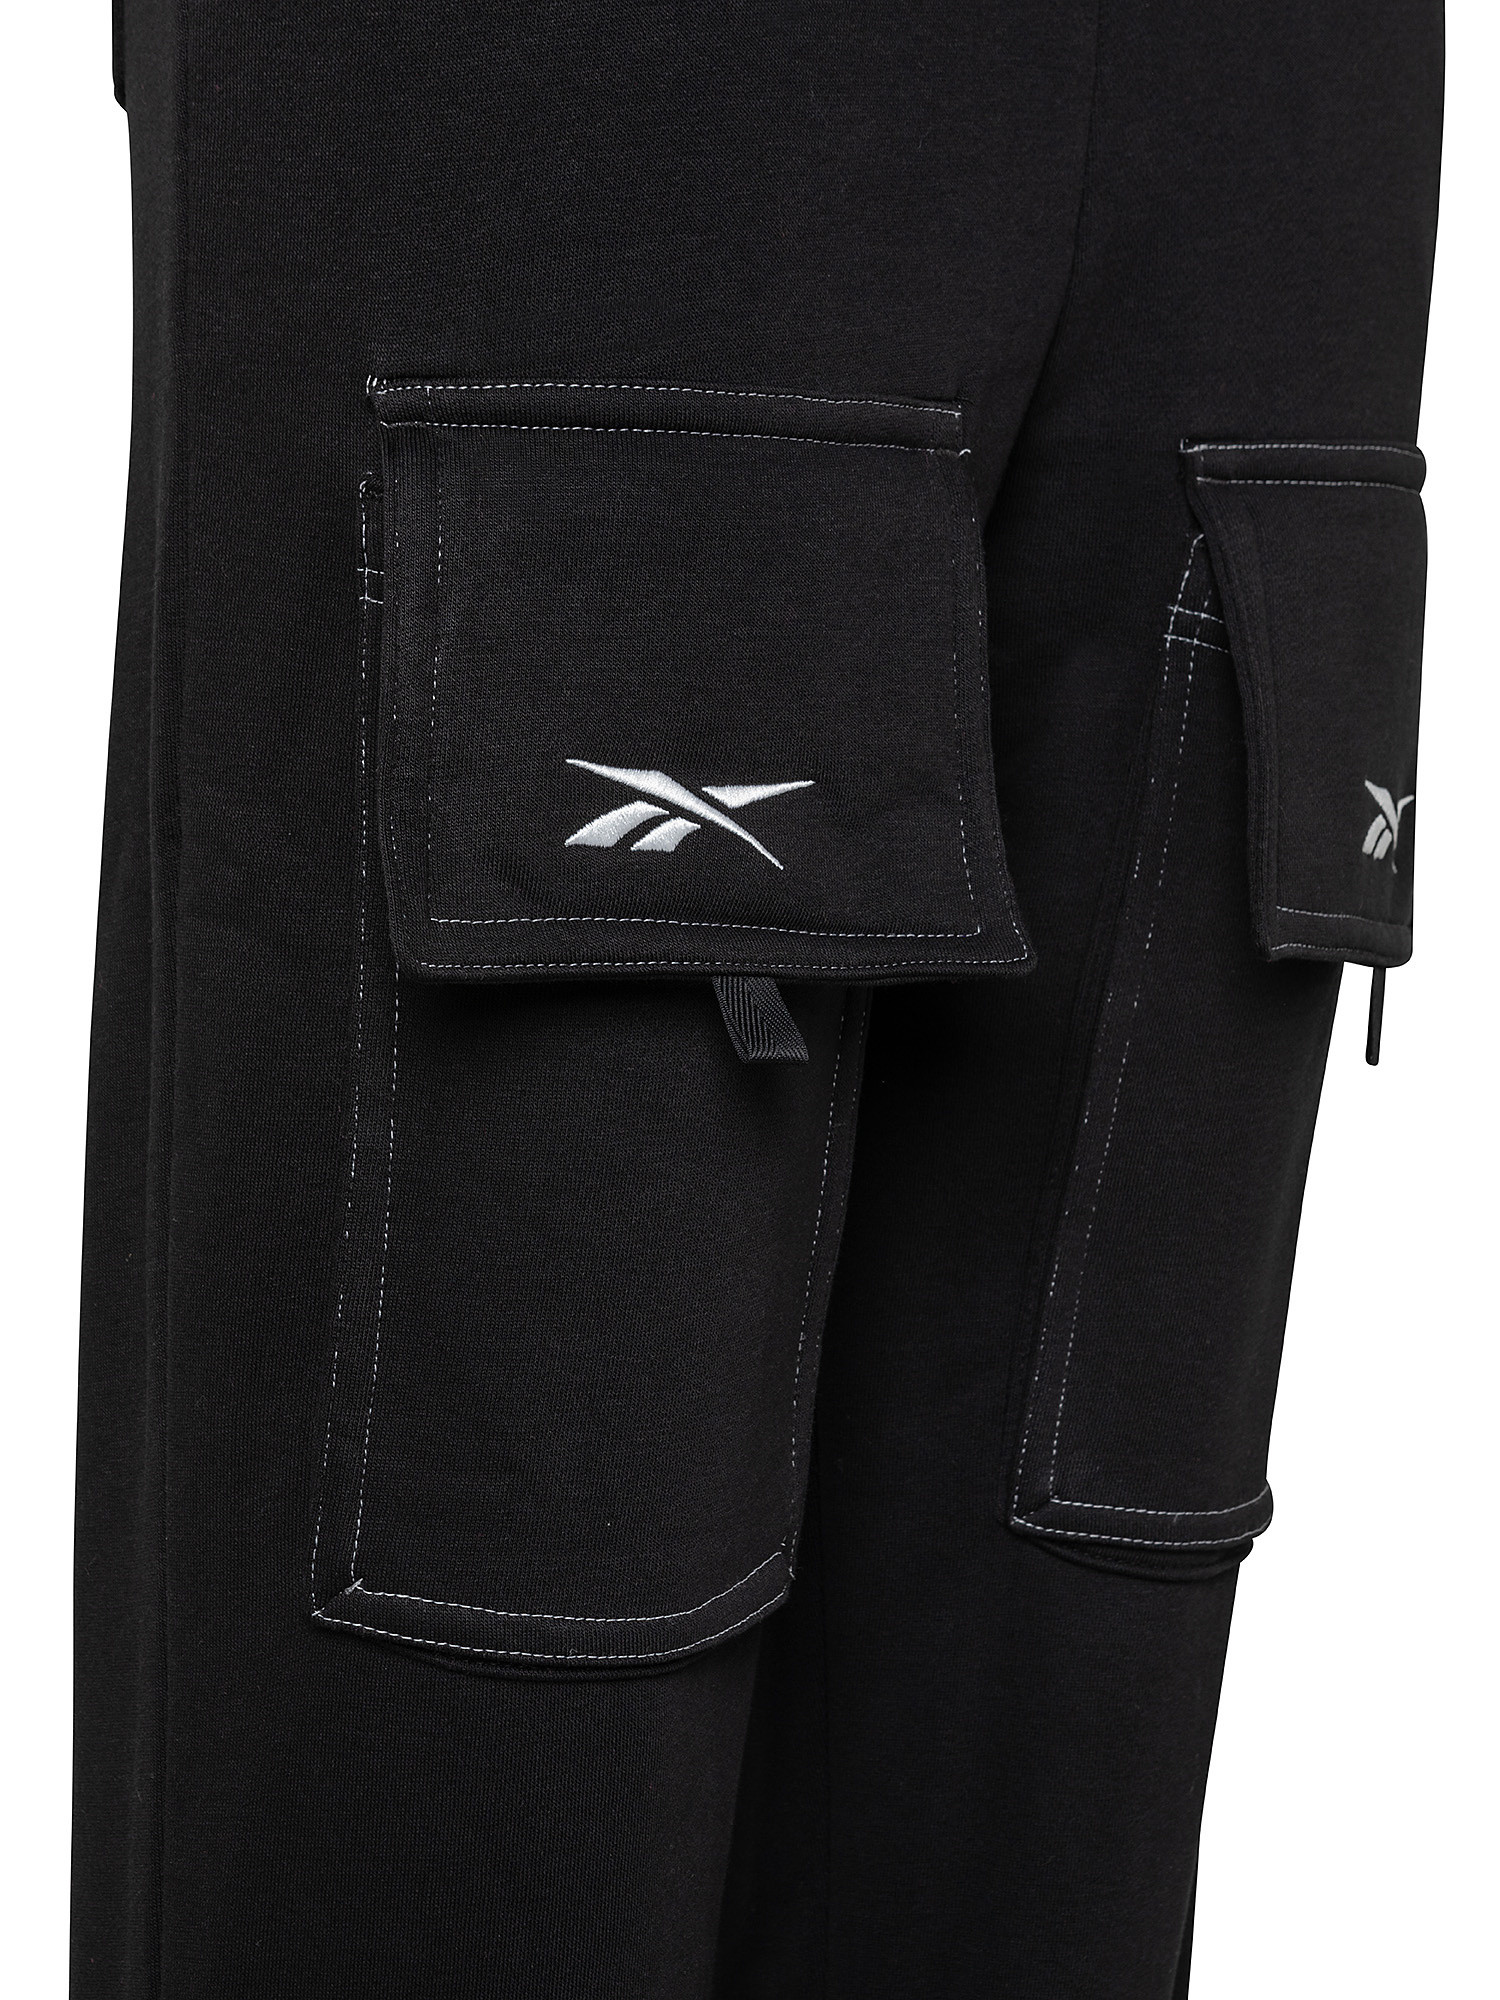 Pantaloni Cardi B in maglia, Nero, large image number 2